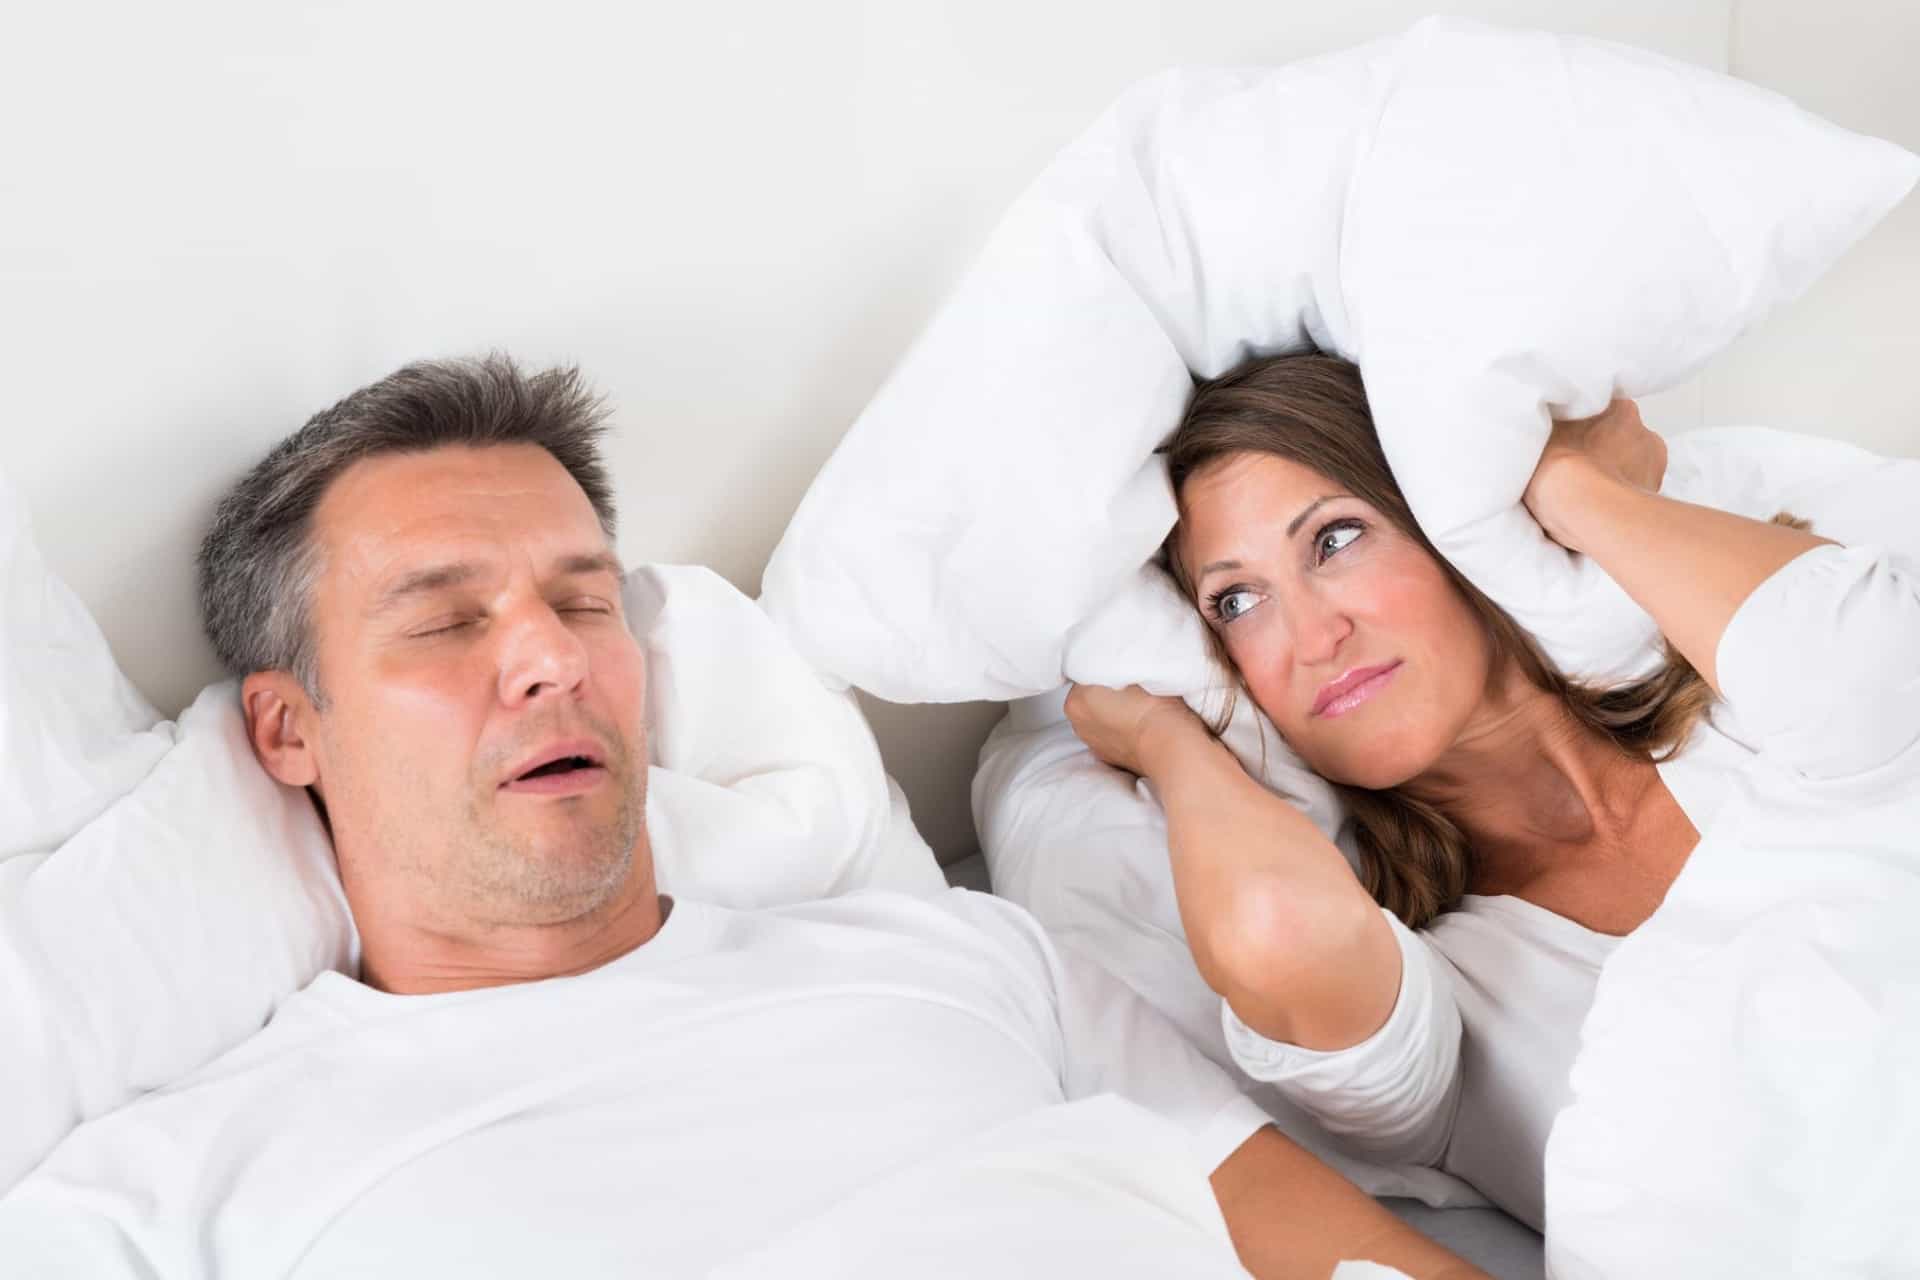 Can’t Sleep? Here Are 5 Signs You Have Sleep Apnea